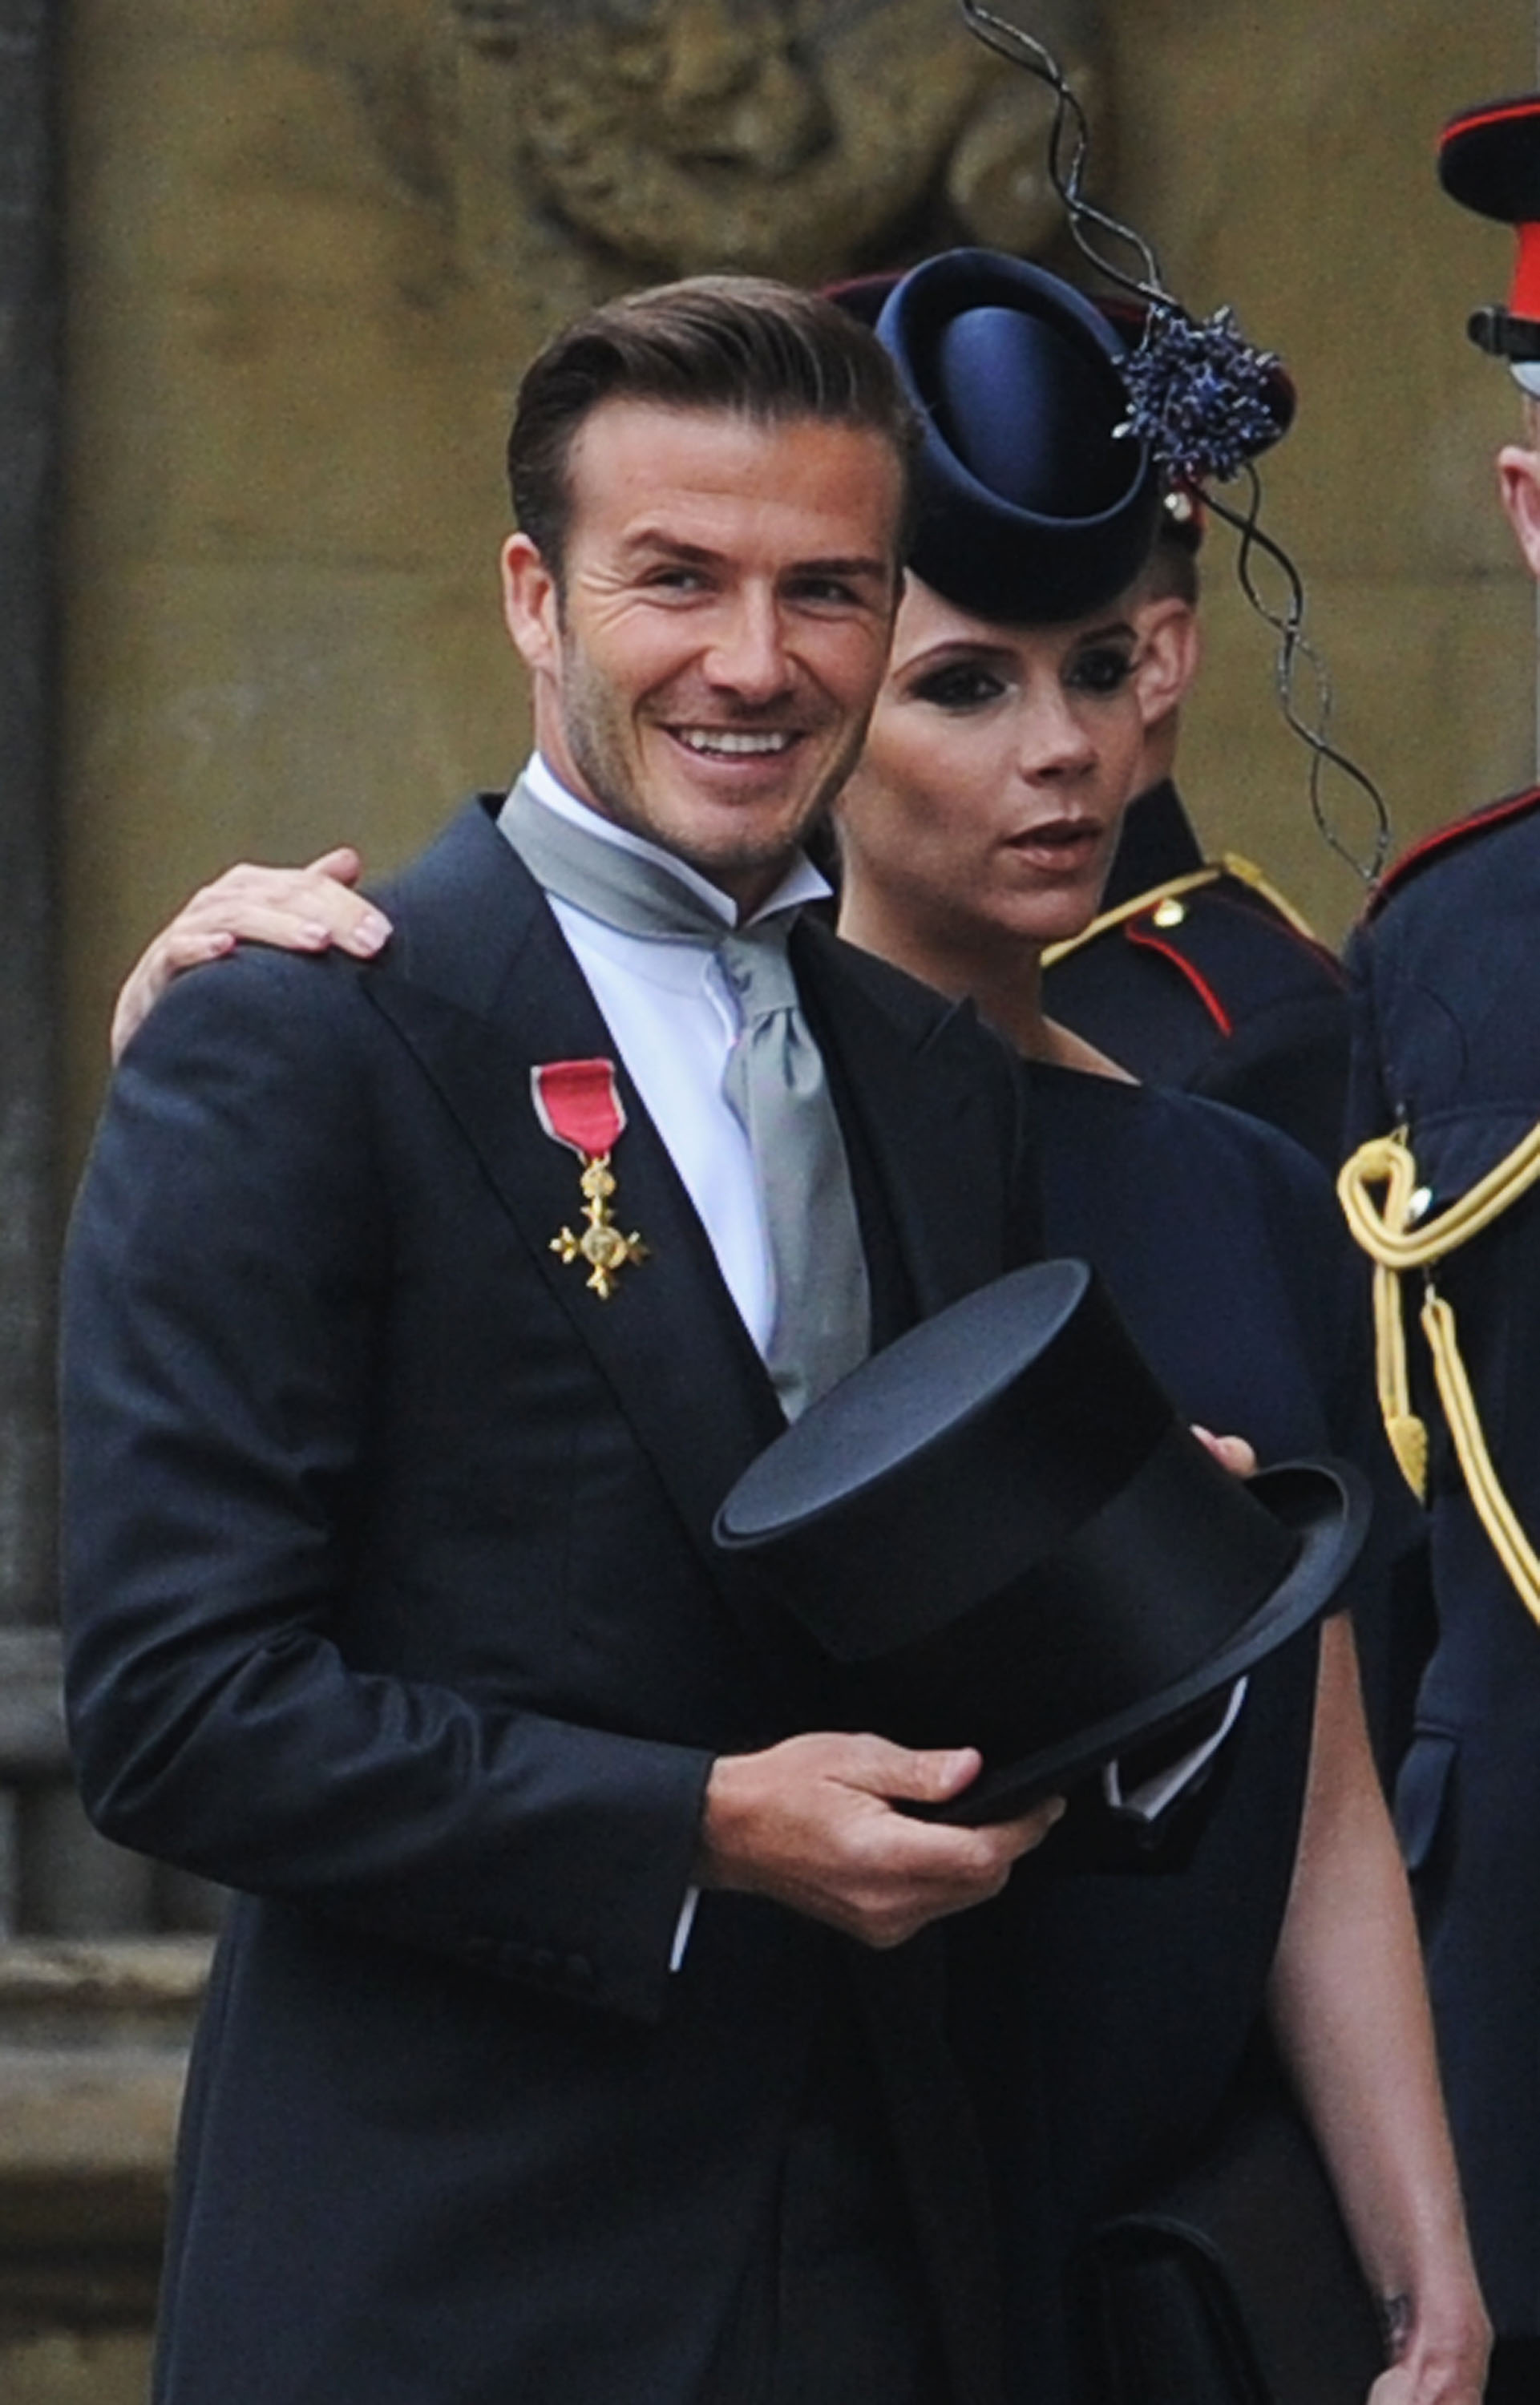 royal wedding hats victoria beckham